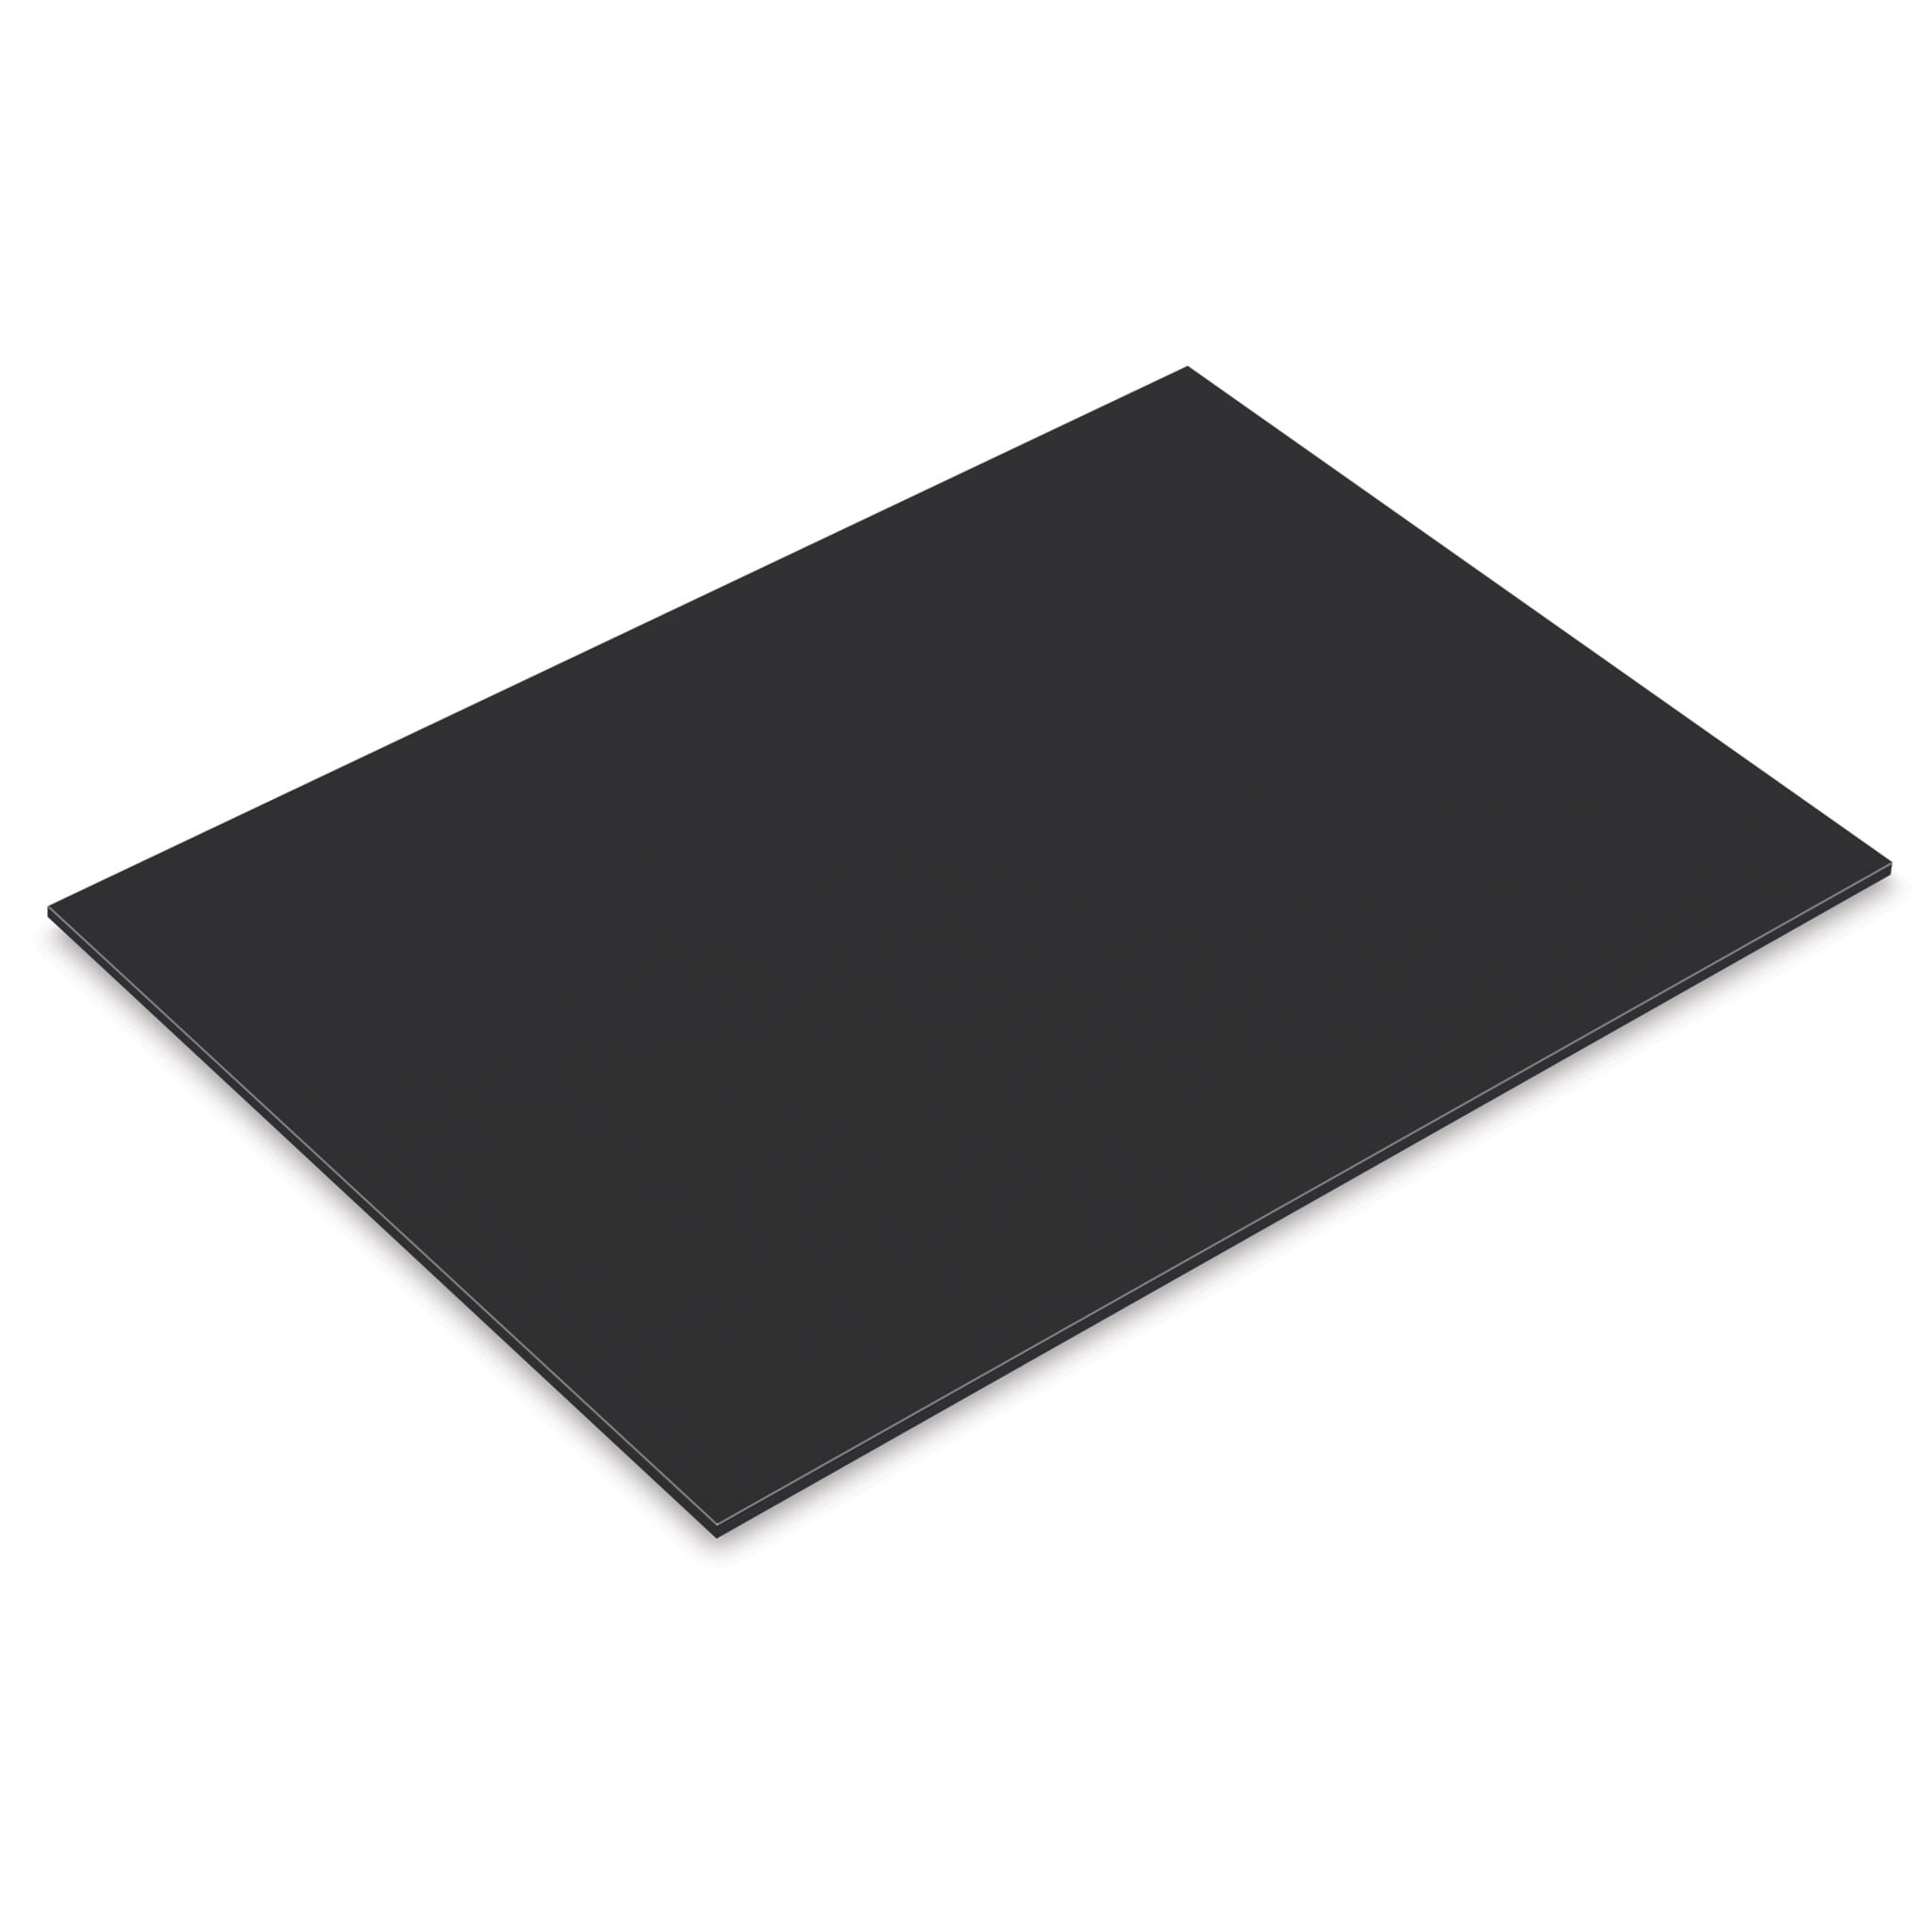 UArt Premium Sanded Pastel Paper Board - 18 x 24, Dark, 400 Grit 